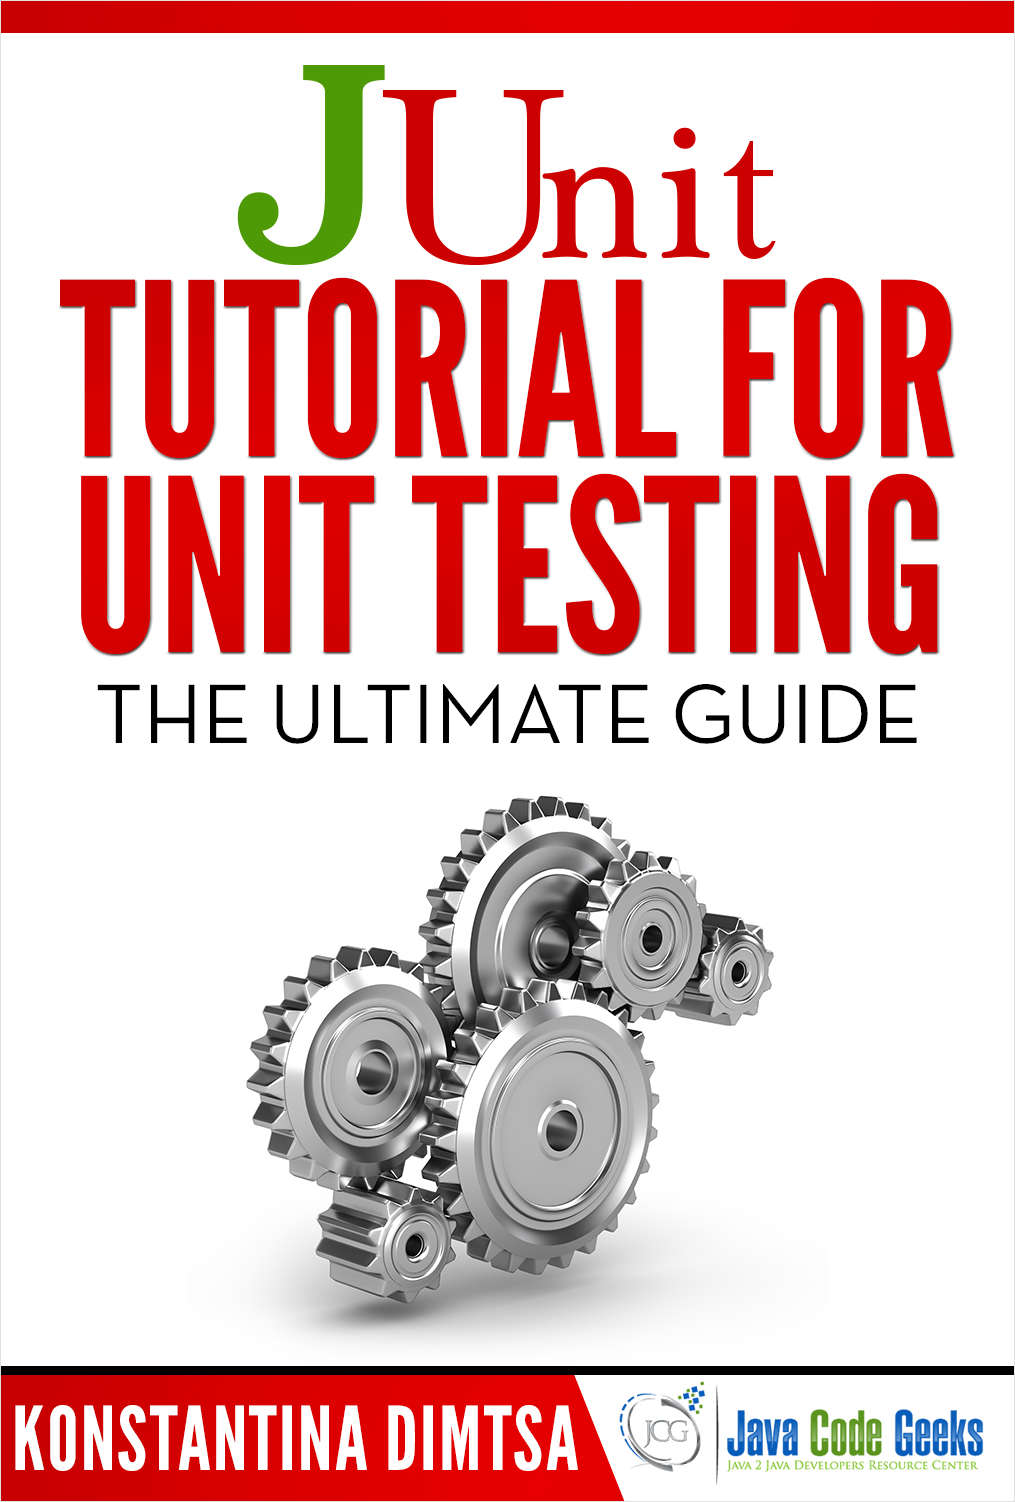 JUnit Tutorial for Unit Testing